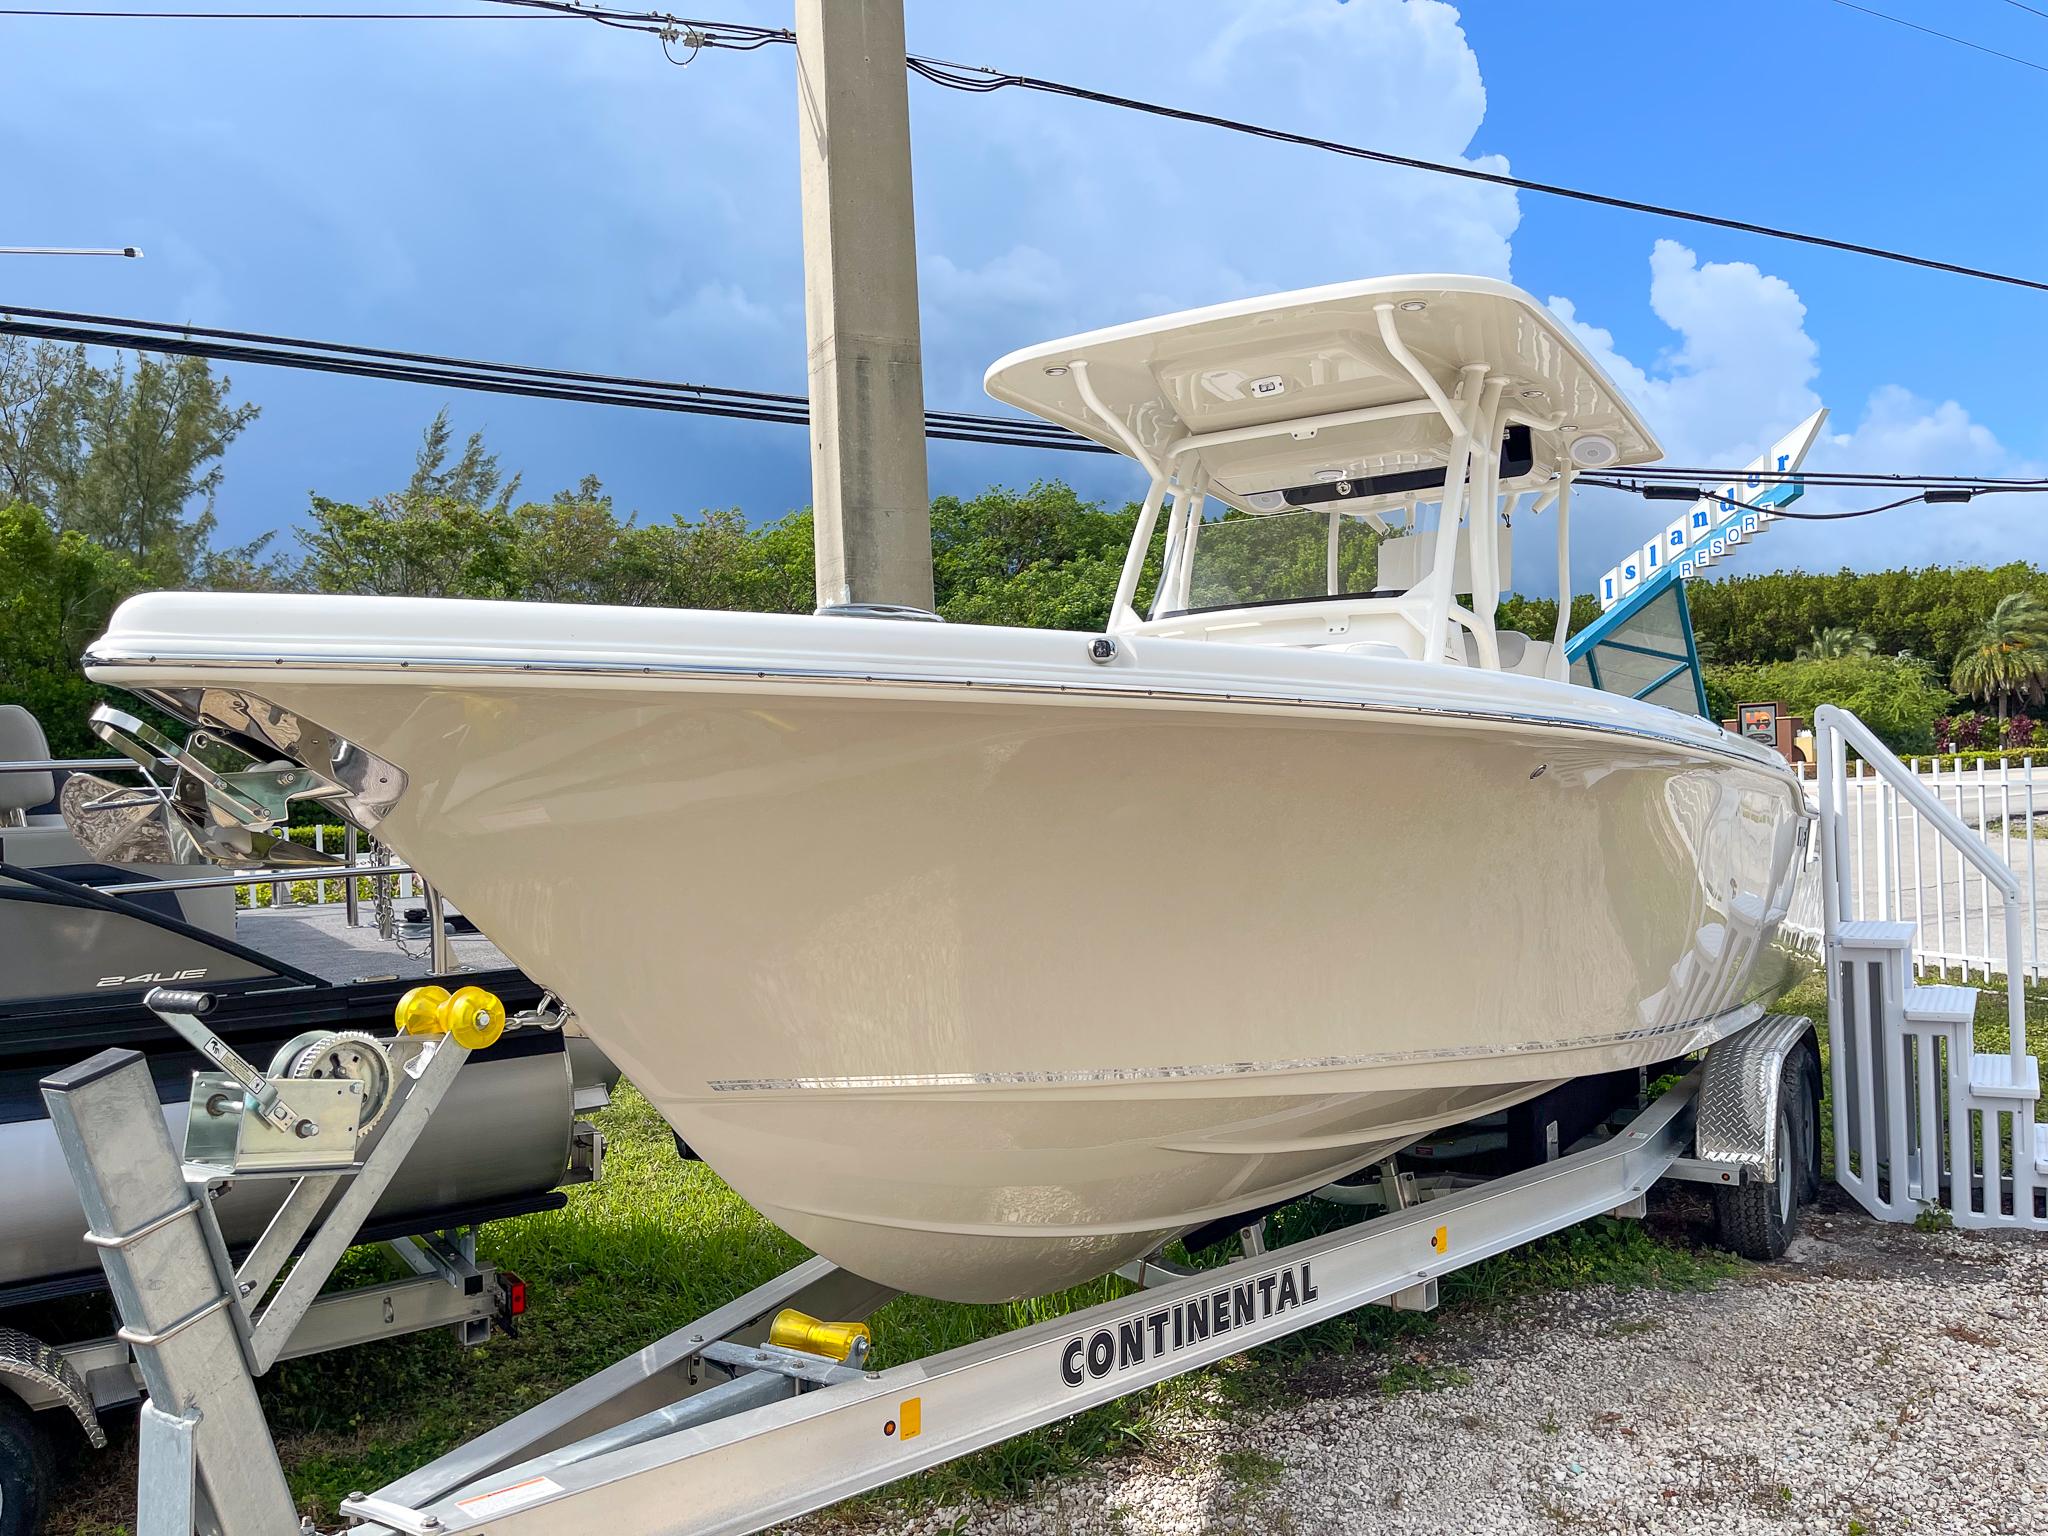 Key West boats for sale - Boat Trader